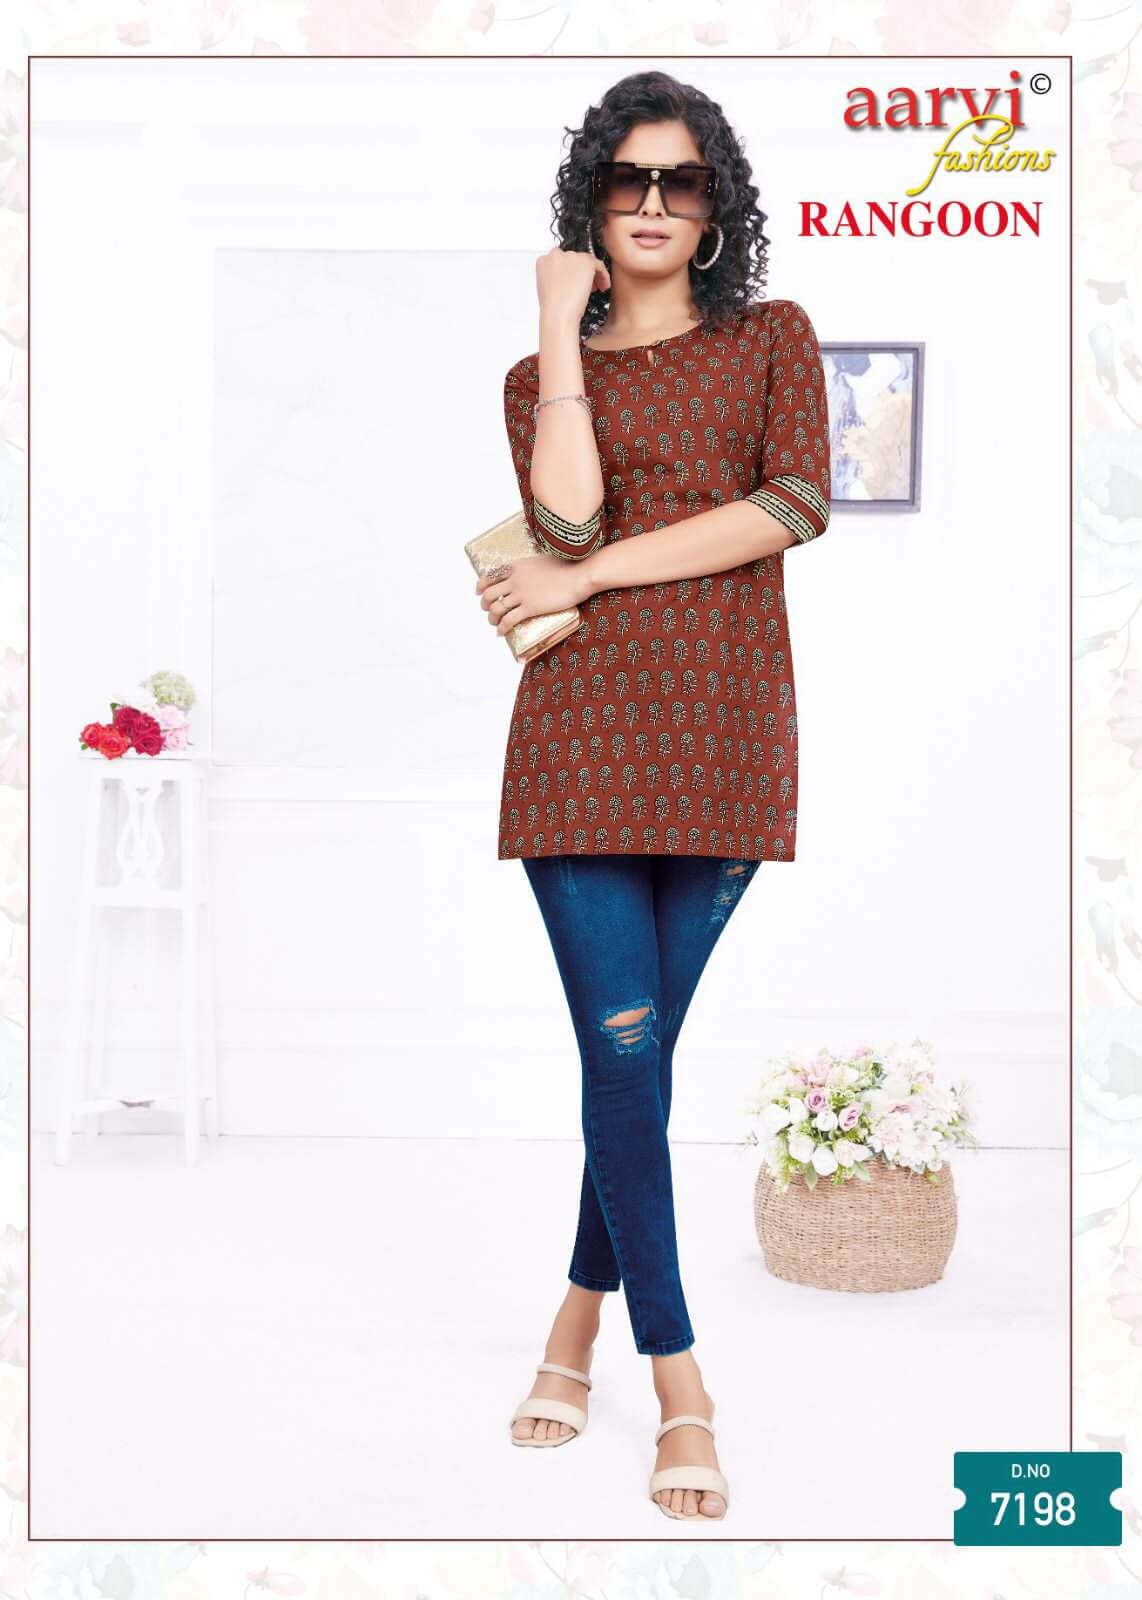 Aarvi Fashions Rangoon Ladies Short Tops Catalog collection 17